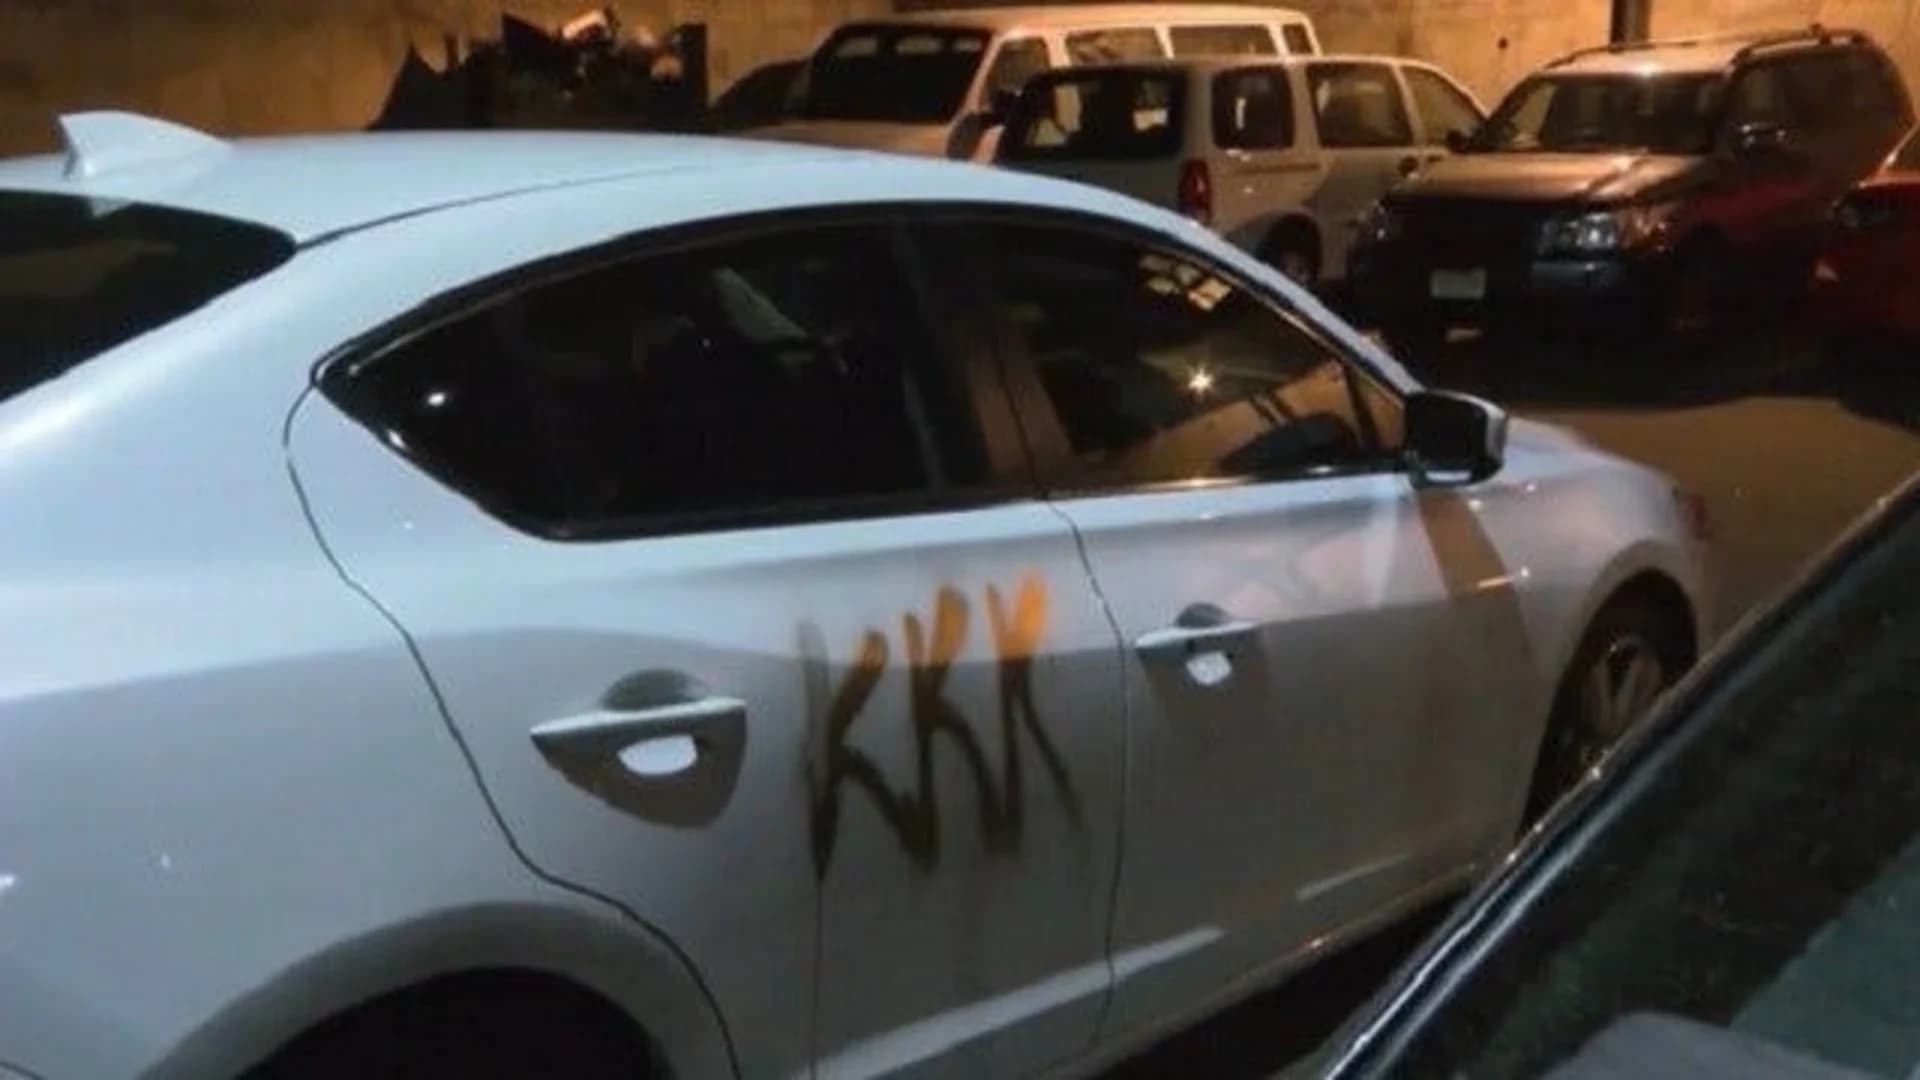 Newark police seek person who spray-painted hate graffiti on car